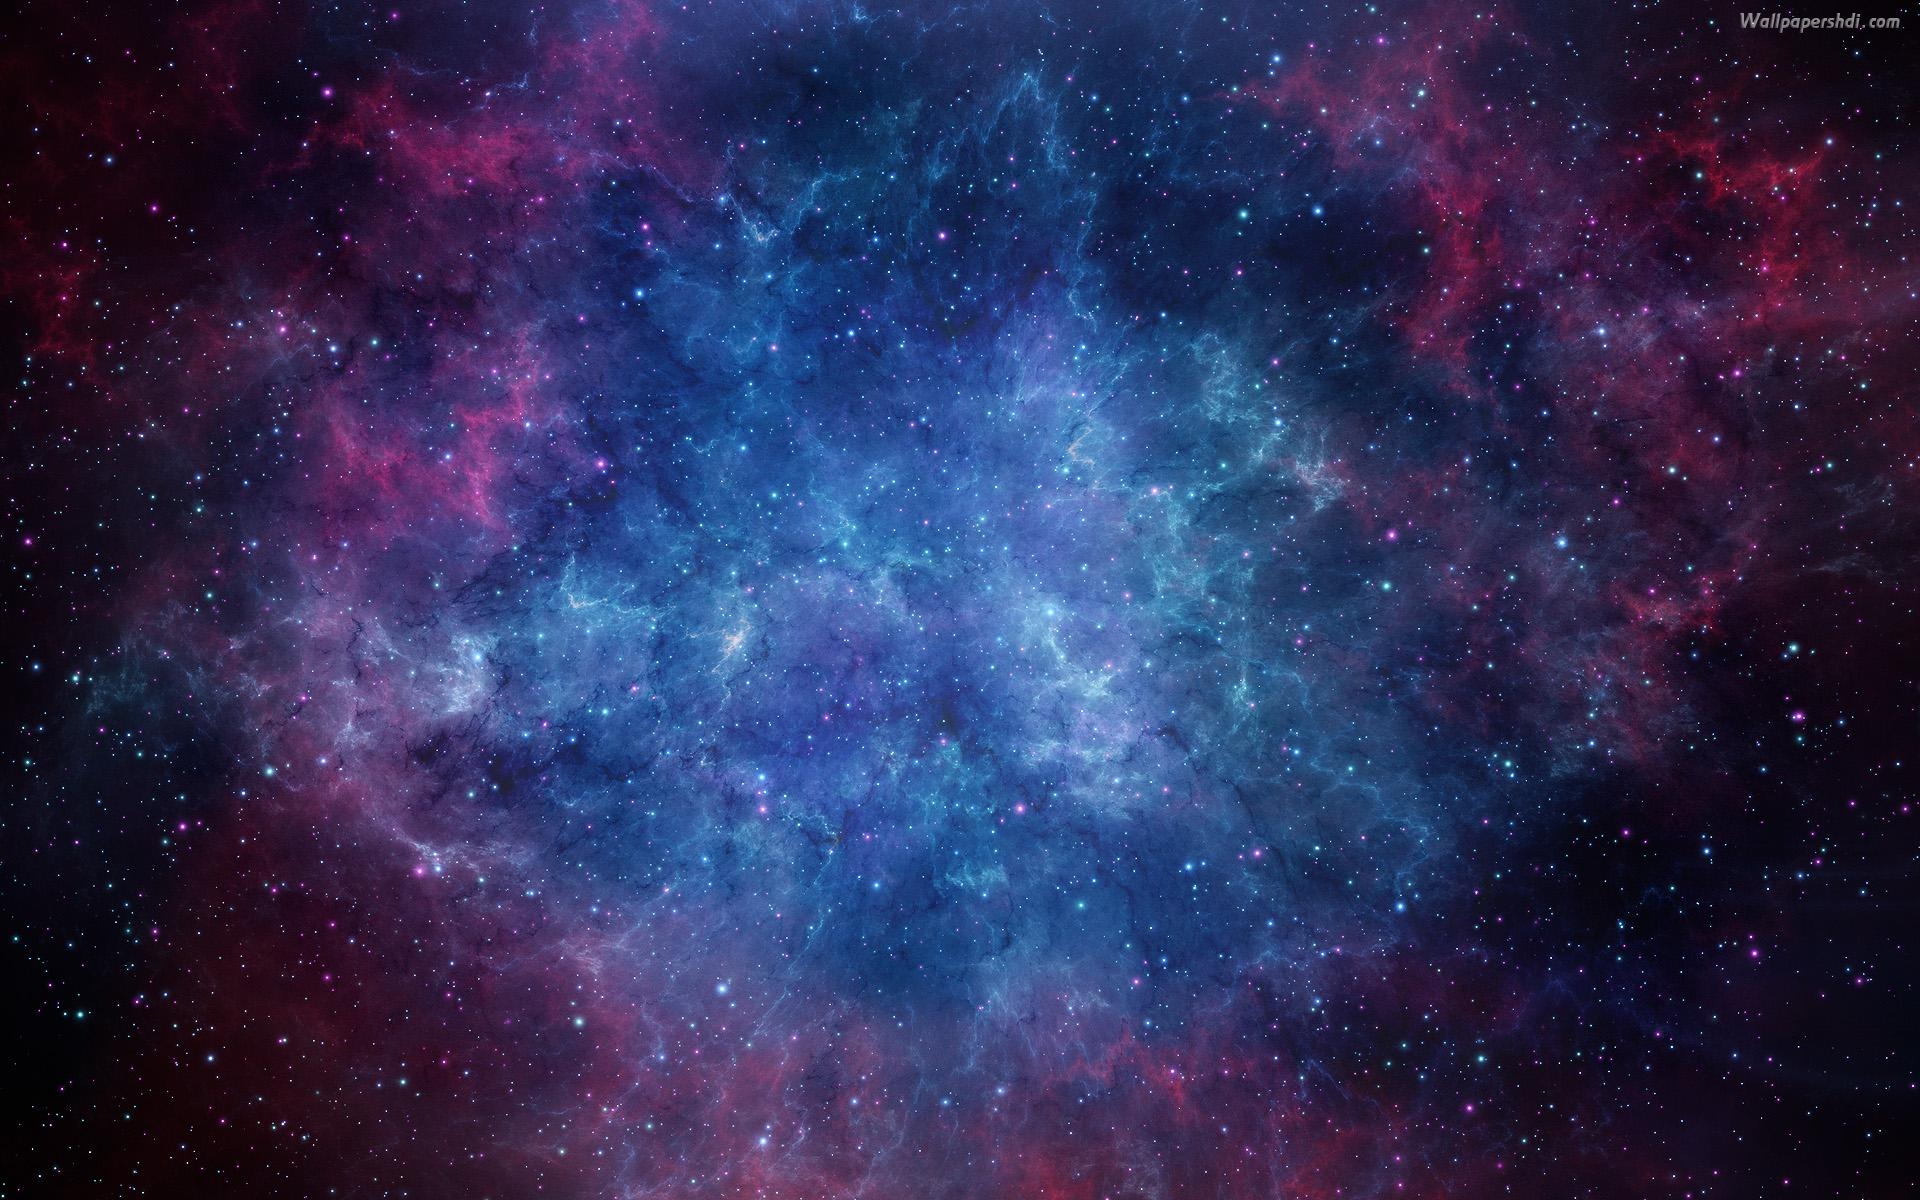 Nebula wallpaper widescreen 0 - HD Widescreen Backgrounds